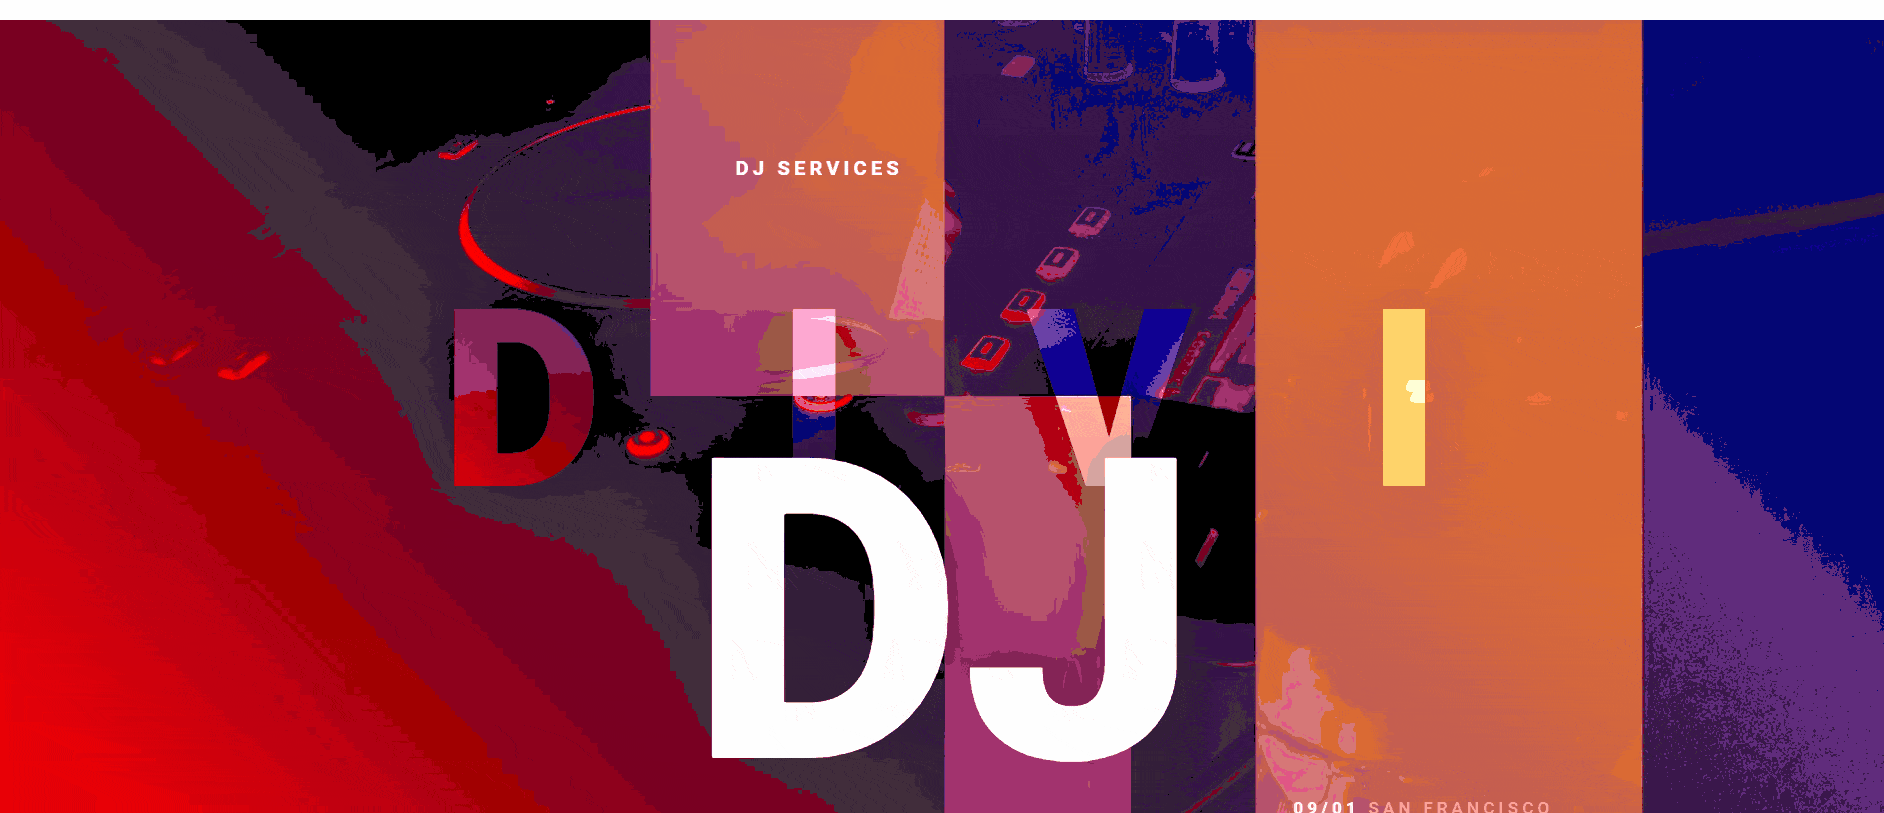 DJ layout pack wordpress theme